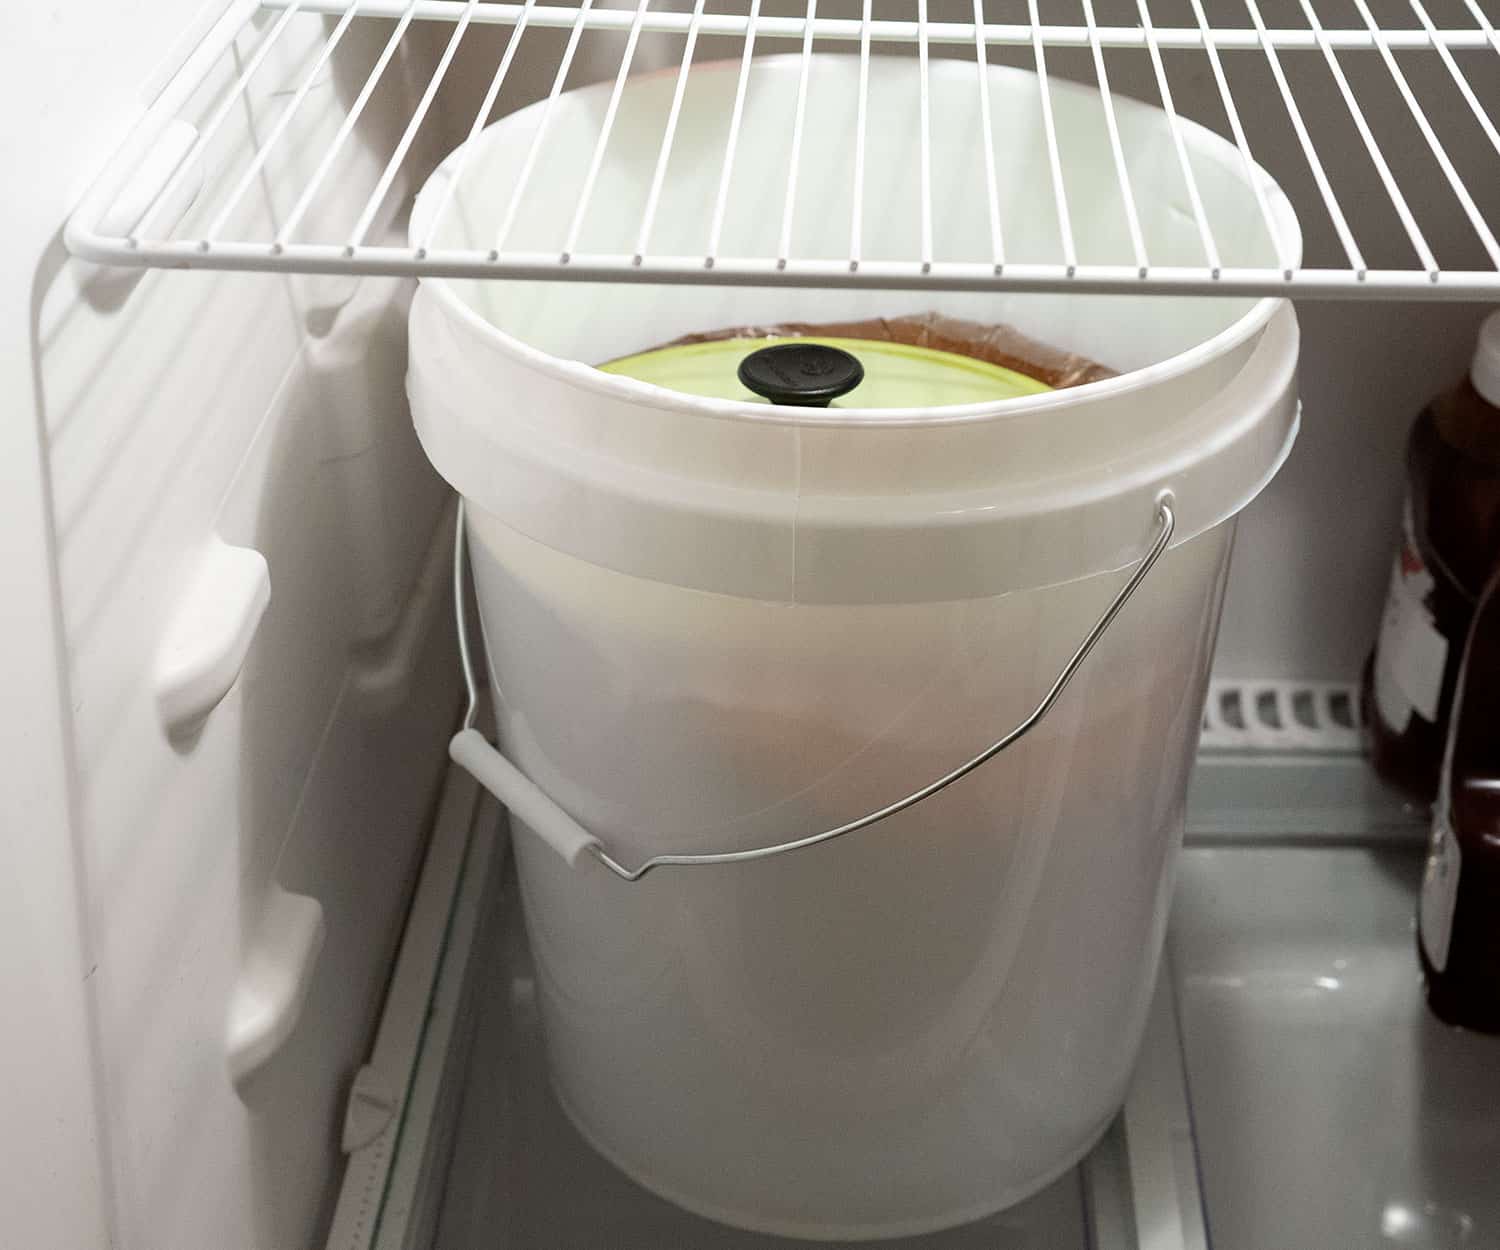 bucket in fridge with turkey brining